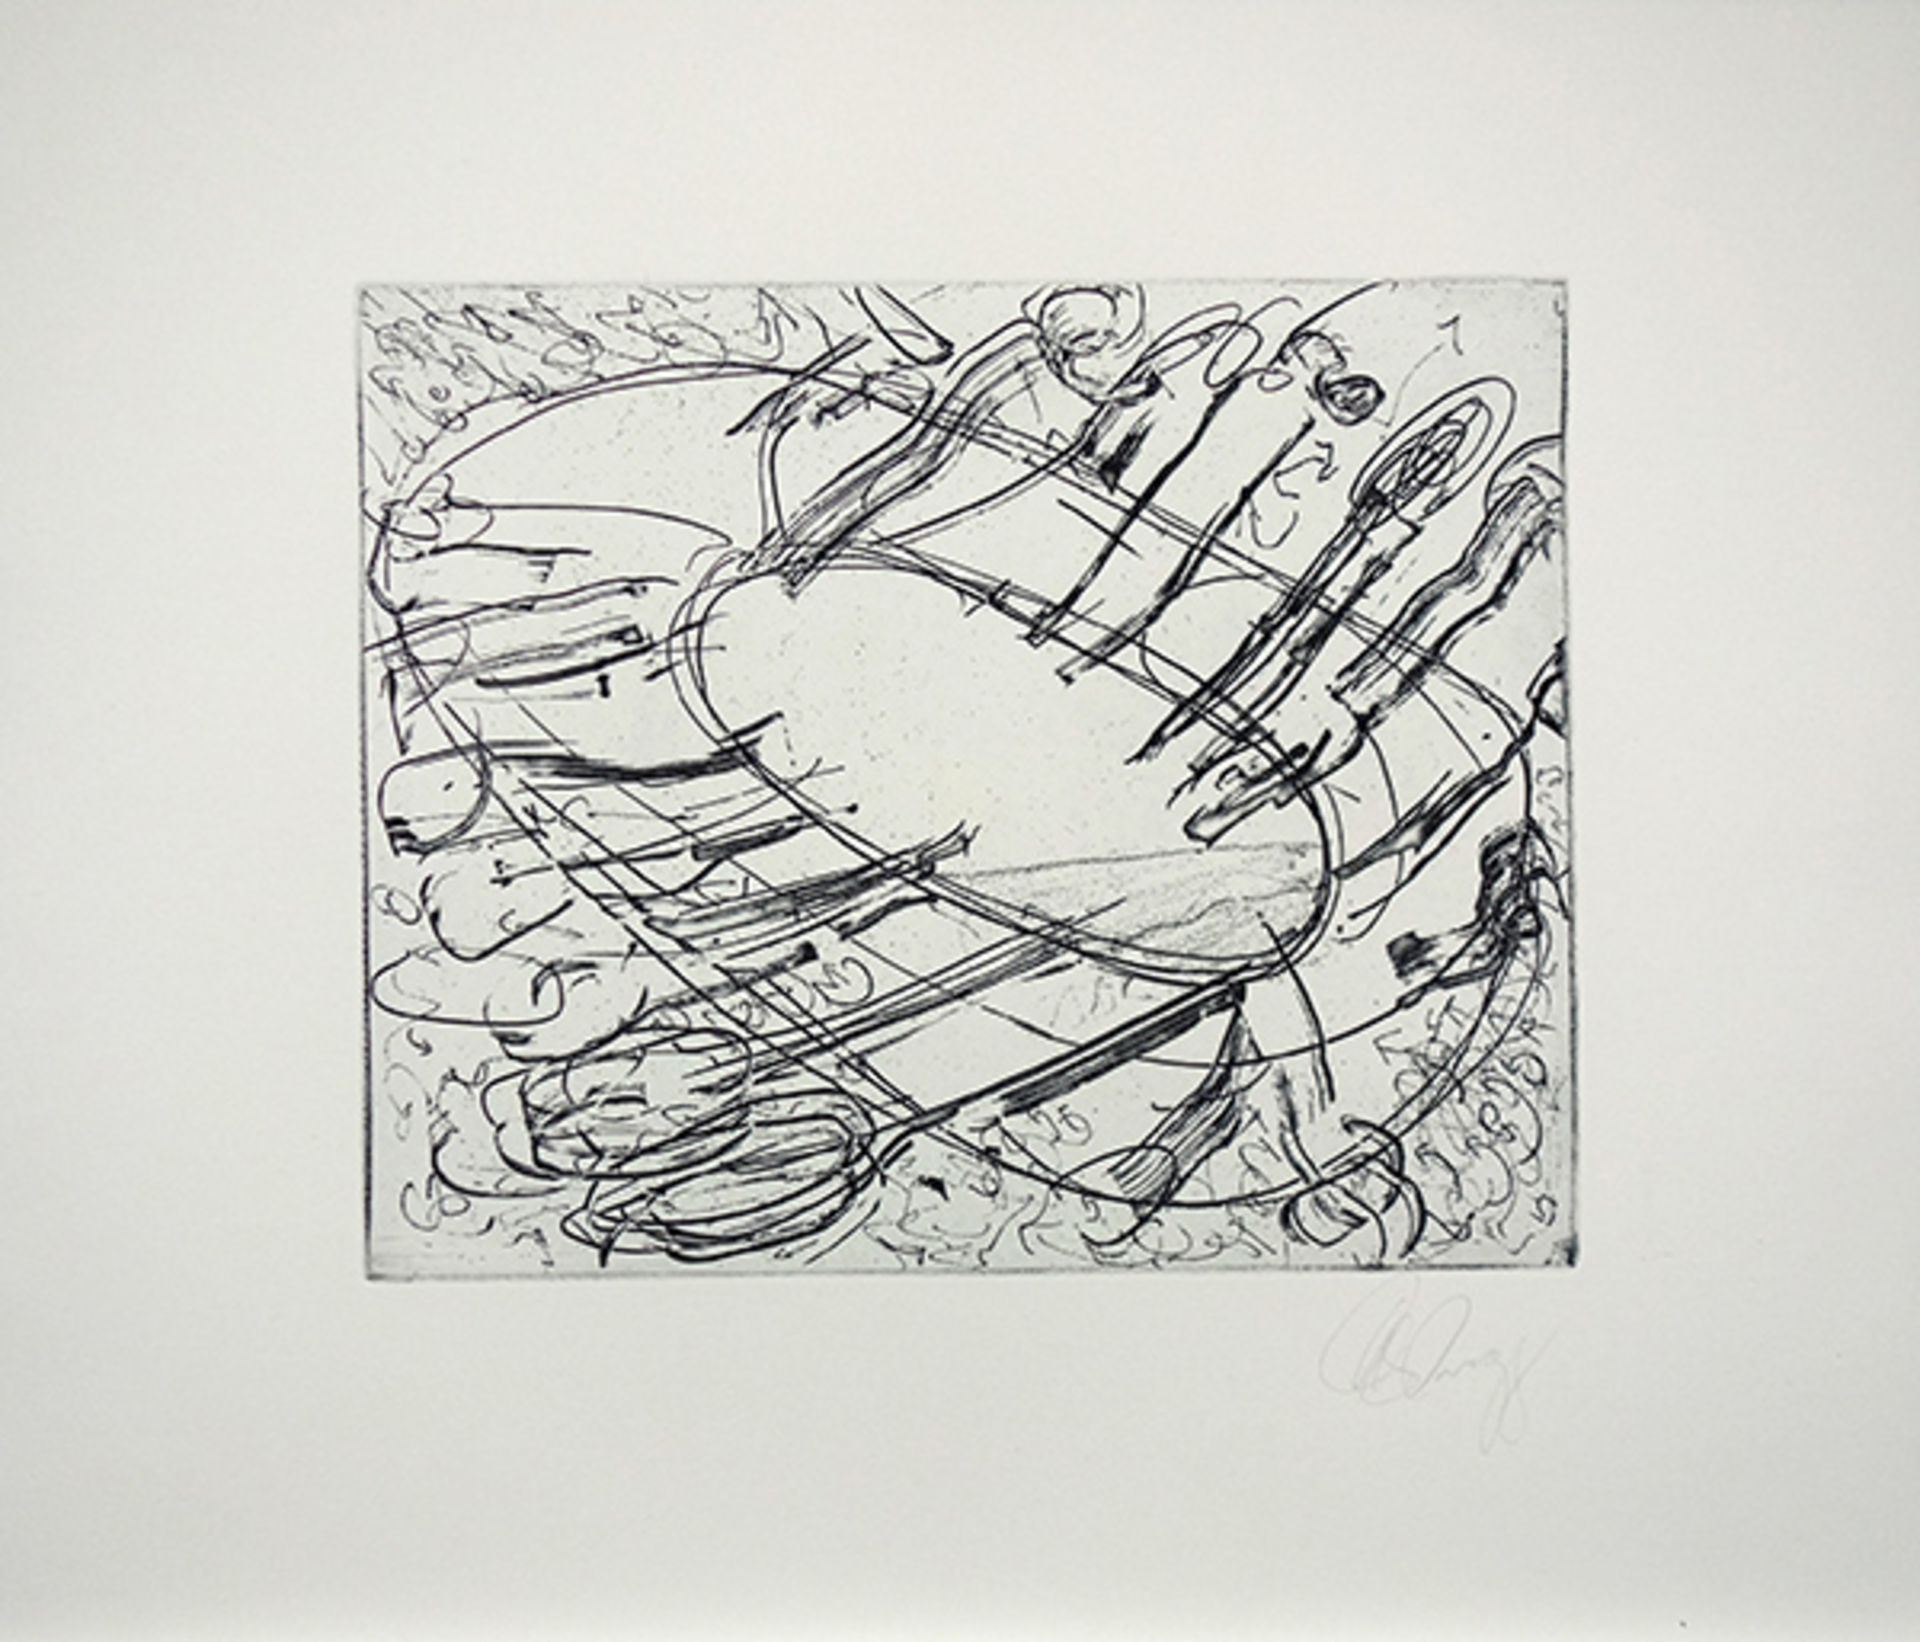 Dinge/Herbst/Current/Das Neblige/Wüste/Vessel (1994)6 works: etchings on hand made paper. Each